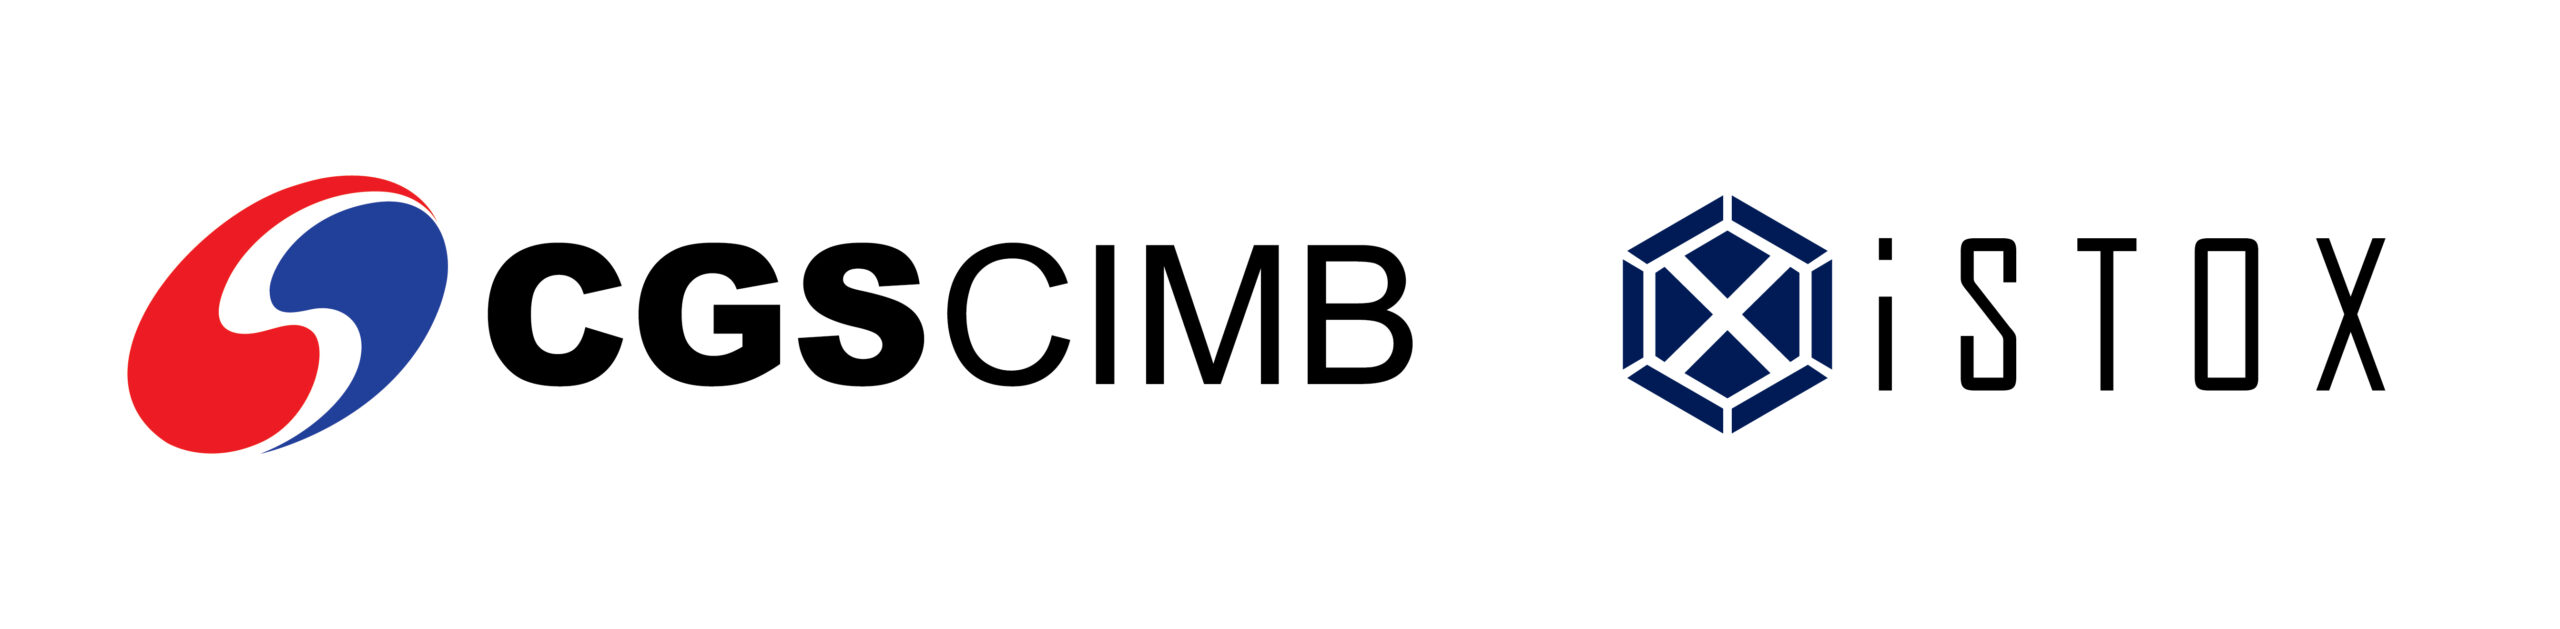 CGS-CIMB and iSTOX Logos